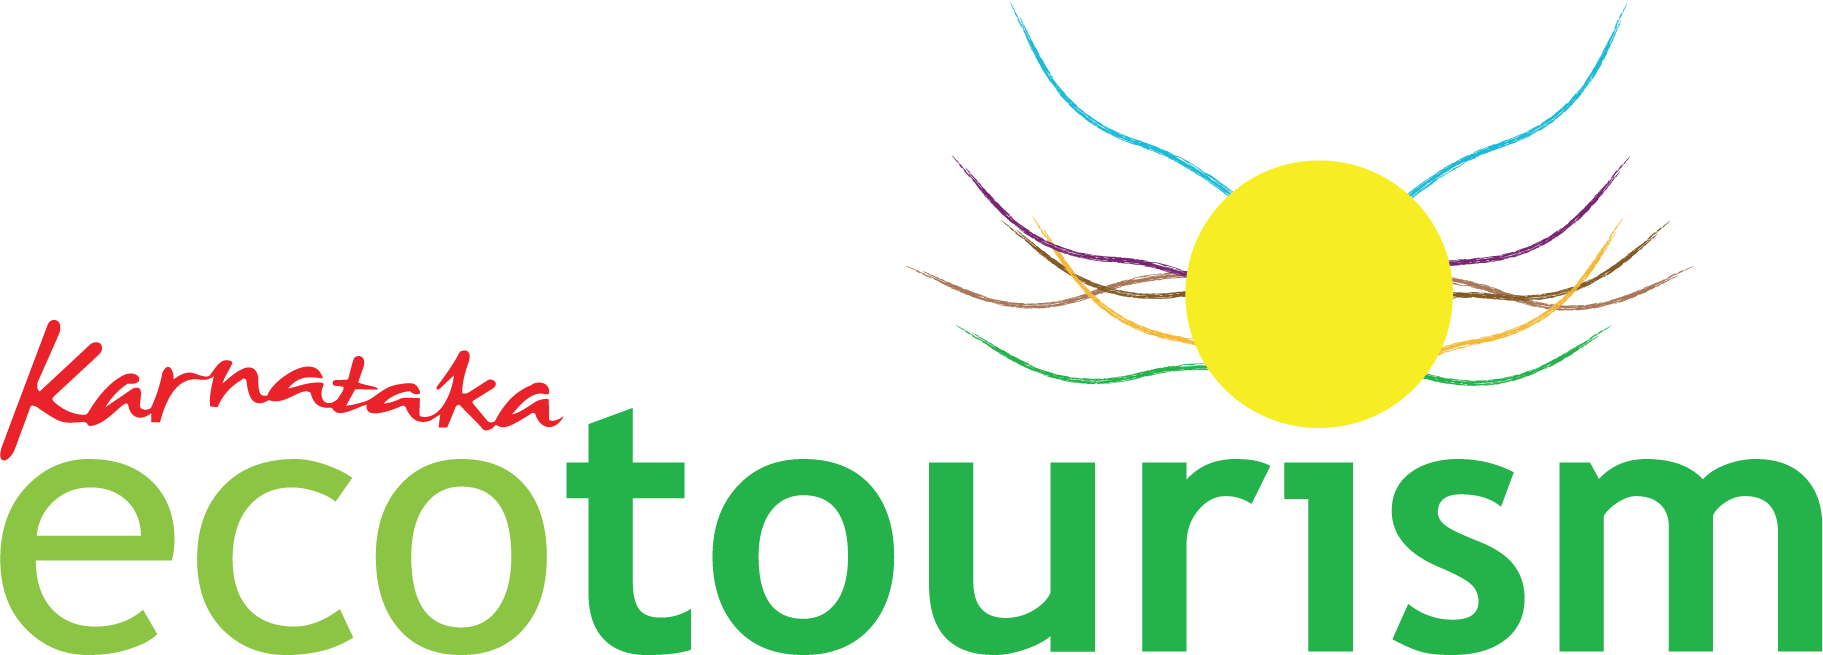 Karnataka Tourism - H.T. Ratnakar, Adviser - Tourism and Hospitality,  Government of Karnataka, India - YouTube